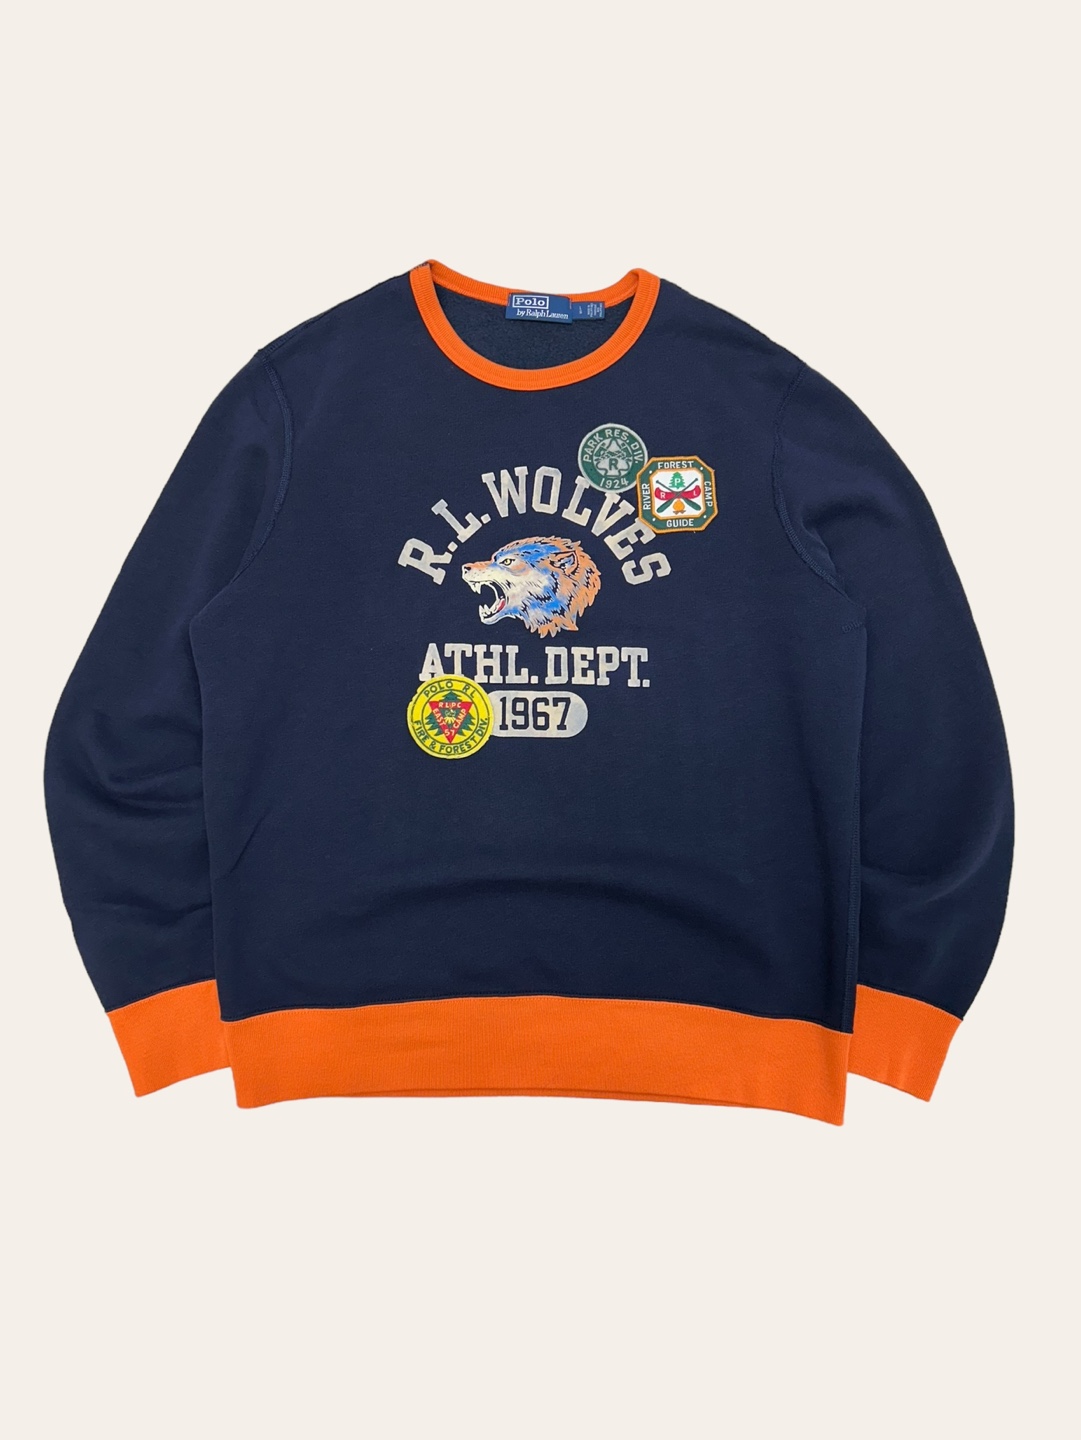 Polo ralph lauren navy R.L.Wolves printing sweatshirt L